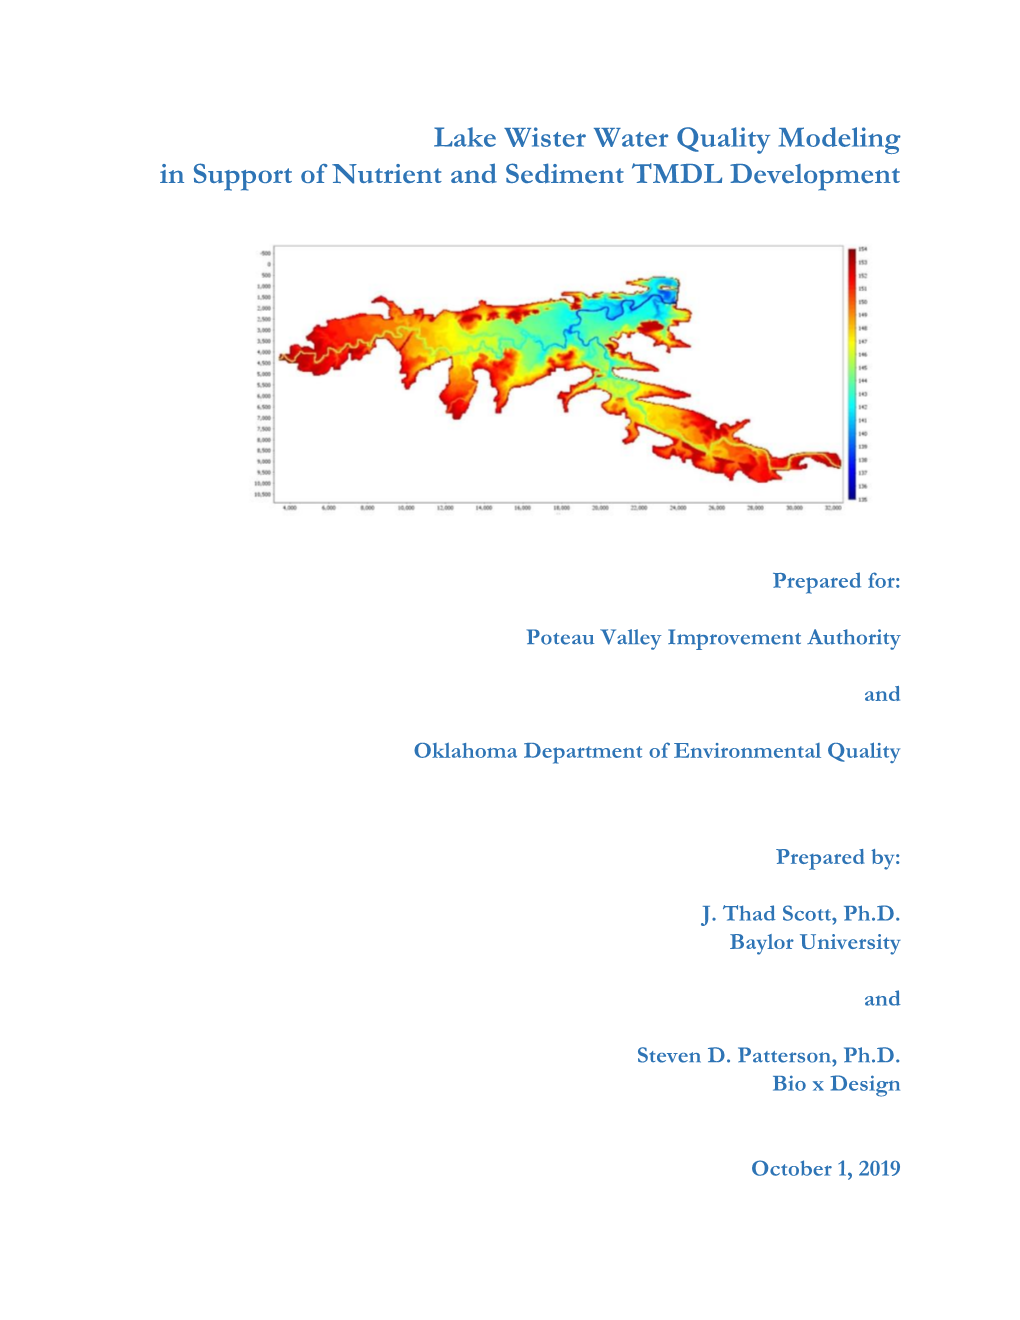 Lake Wister Modeling & TMDL Report